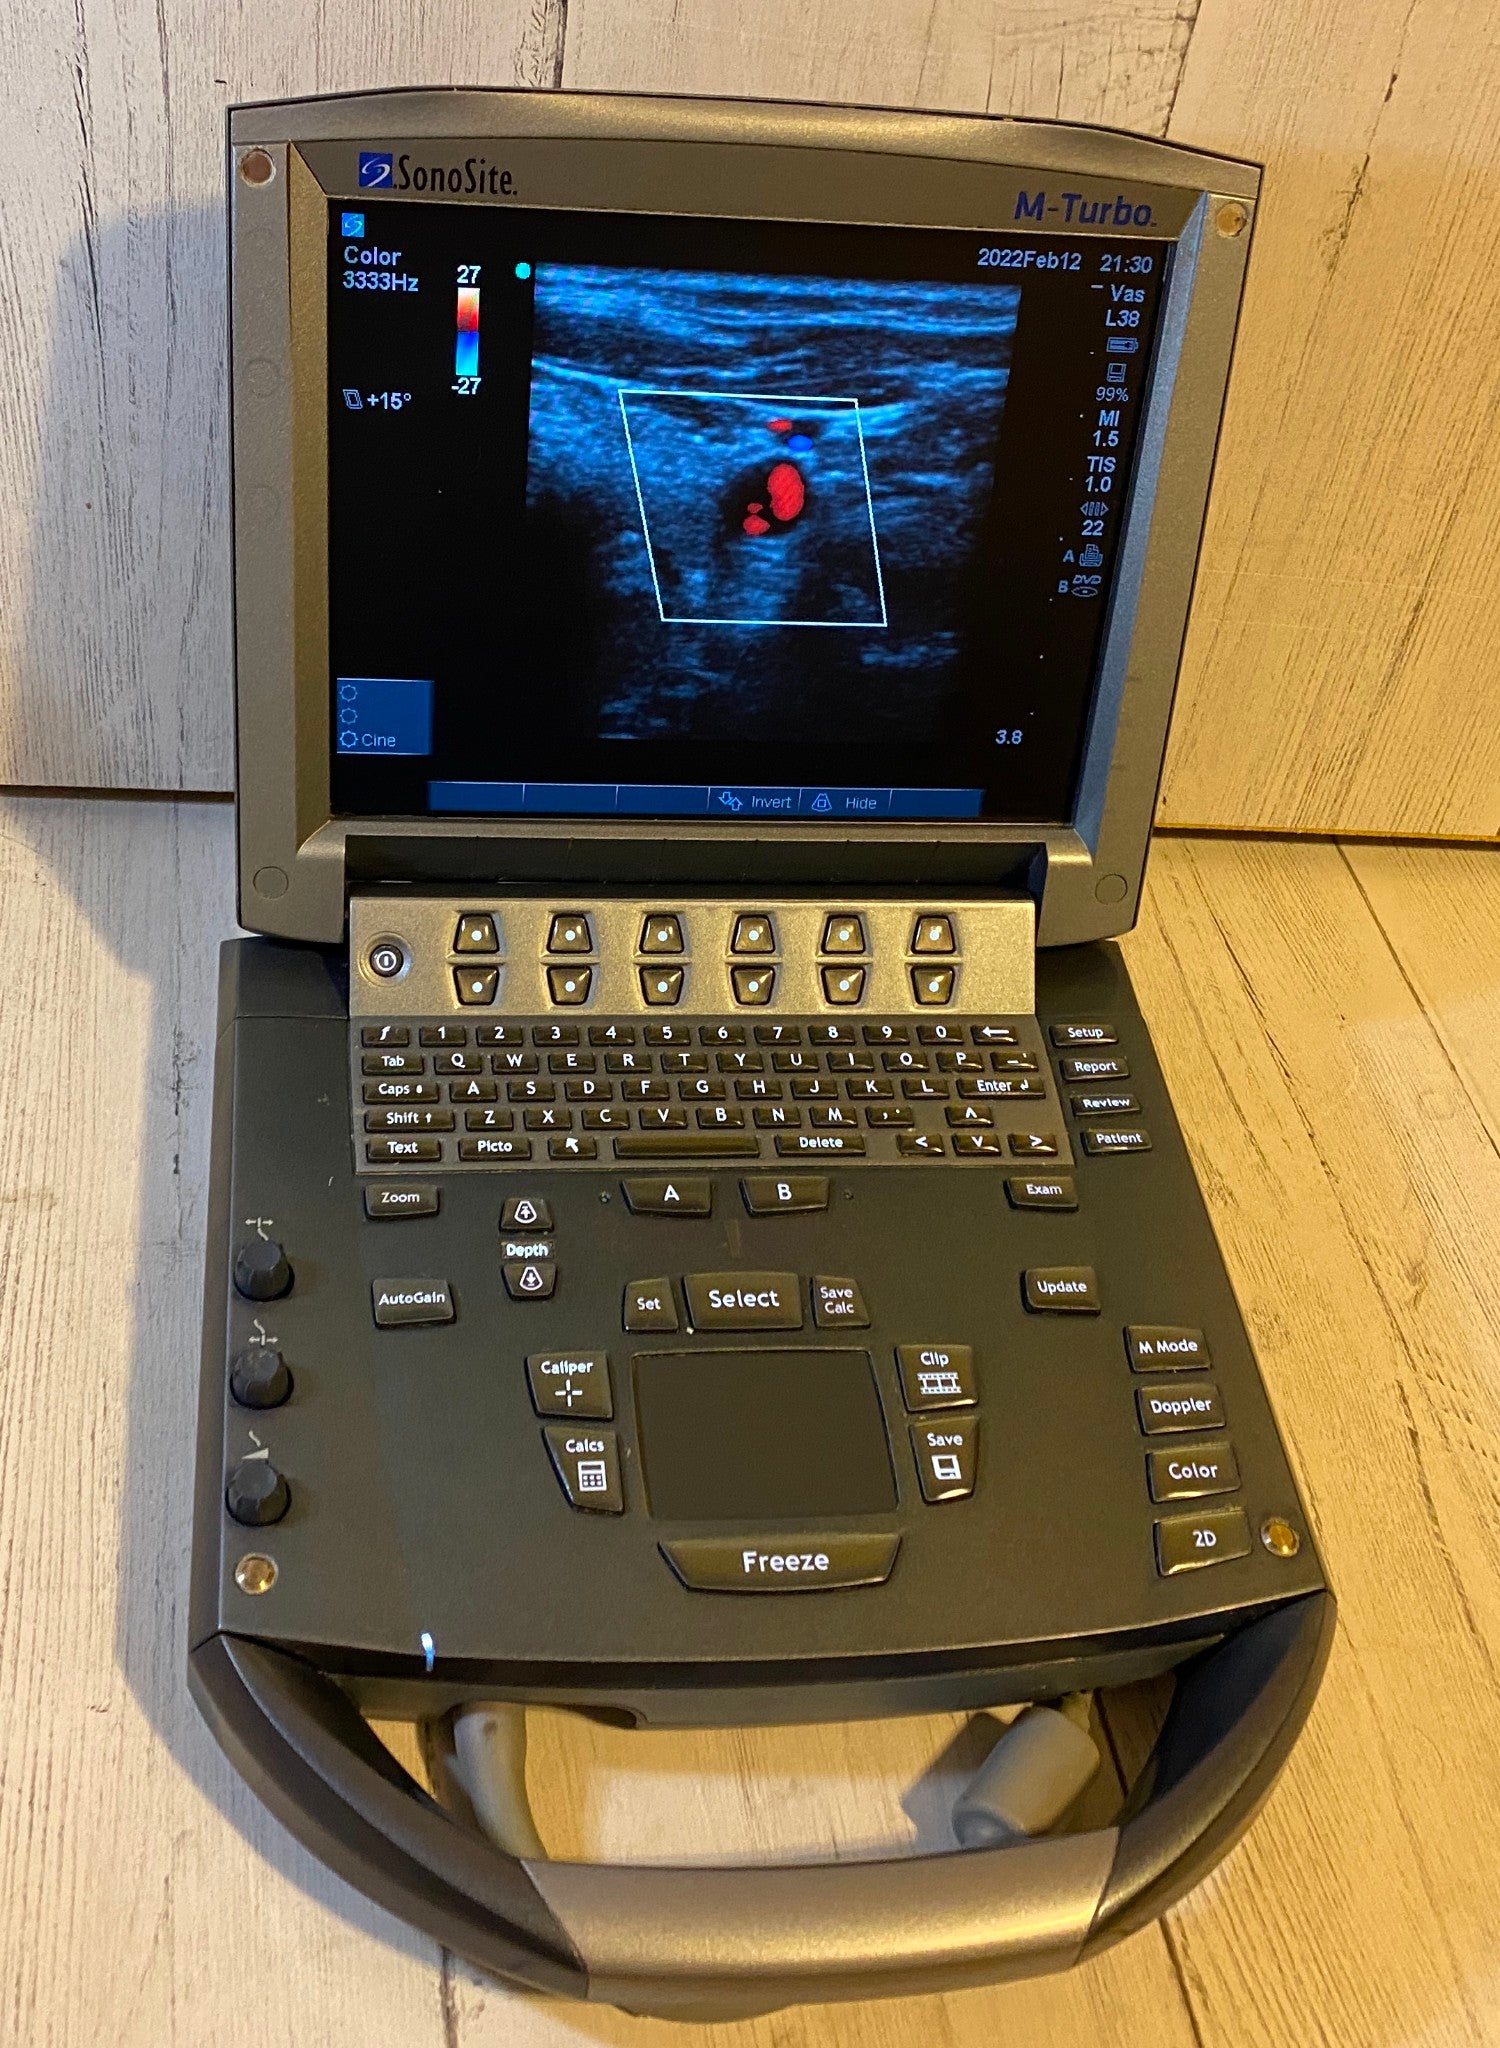 Sonosite M-Turbo Portable Ultrasound 2008 DIAGNOSTIC ULTRASOUND MACHINES FOR SALE